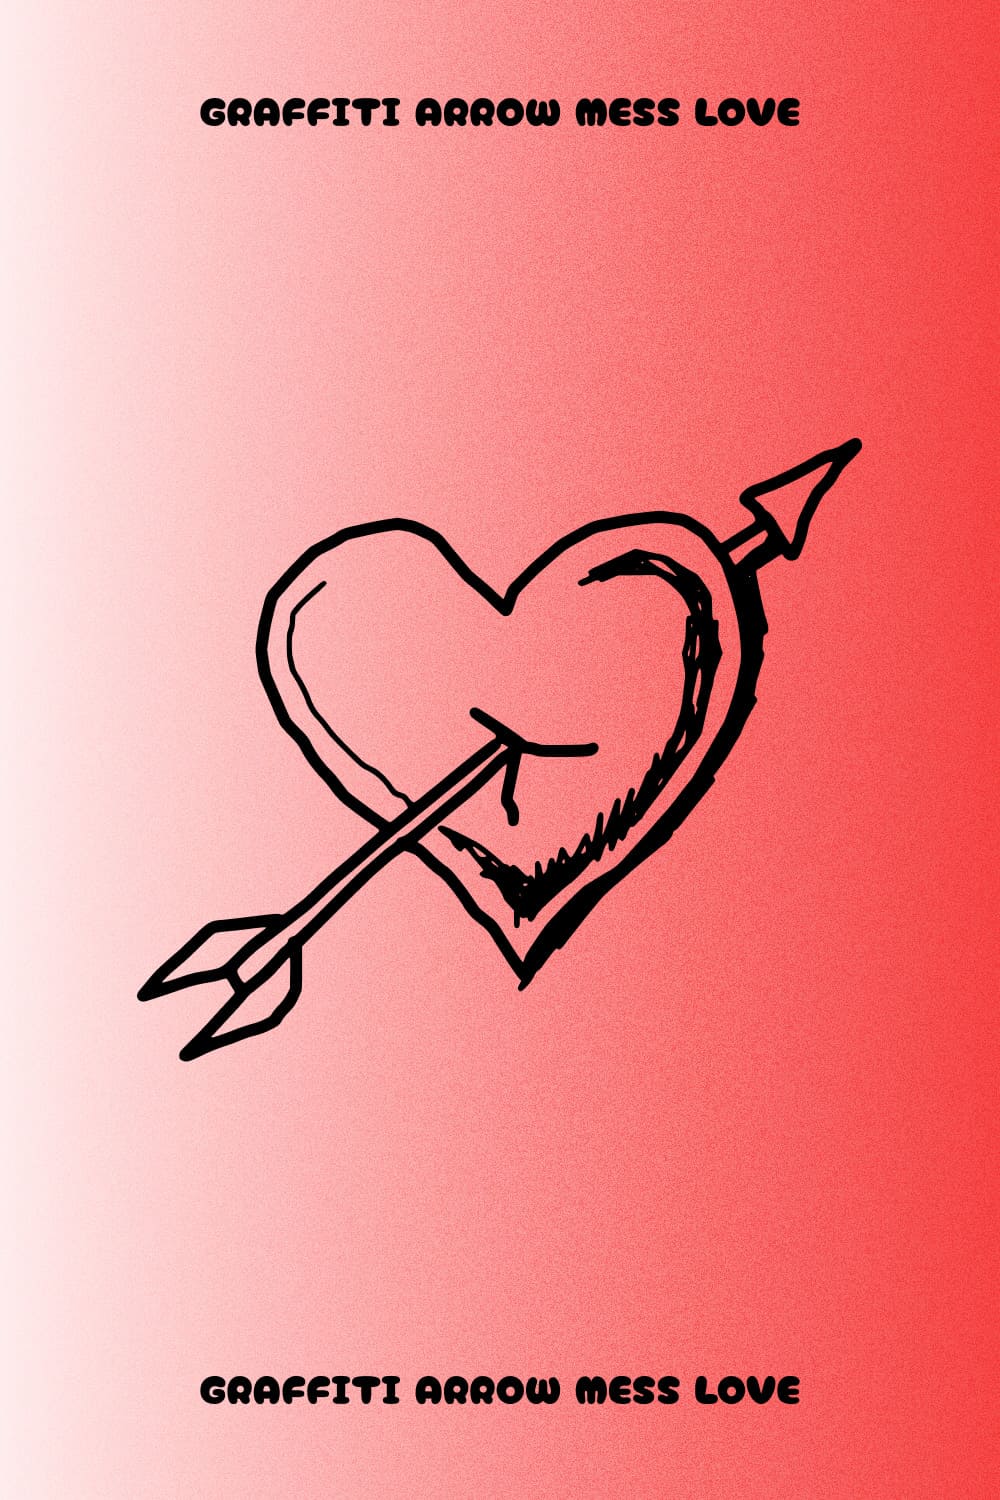 Graffiti Arrow Mess Love - Pinterest Image.